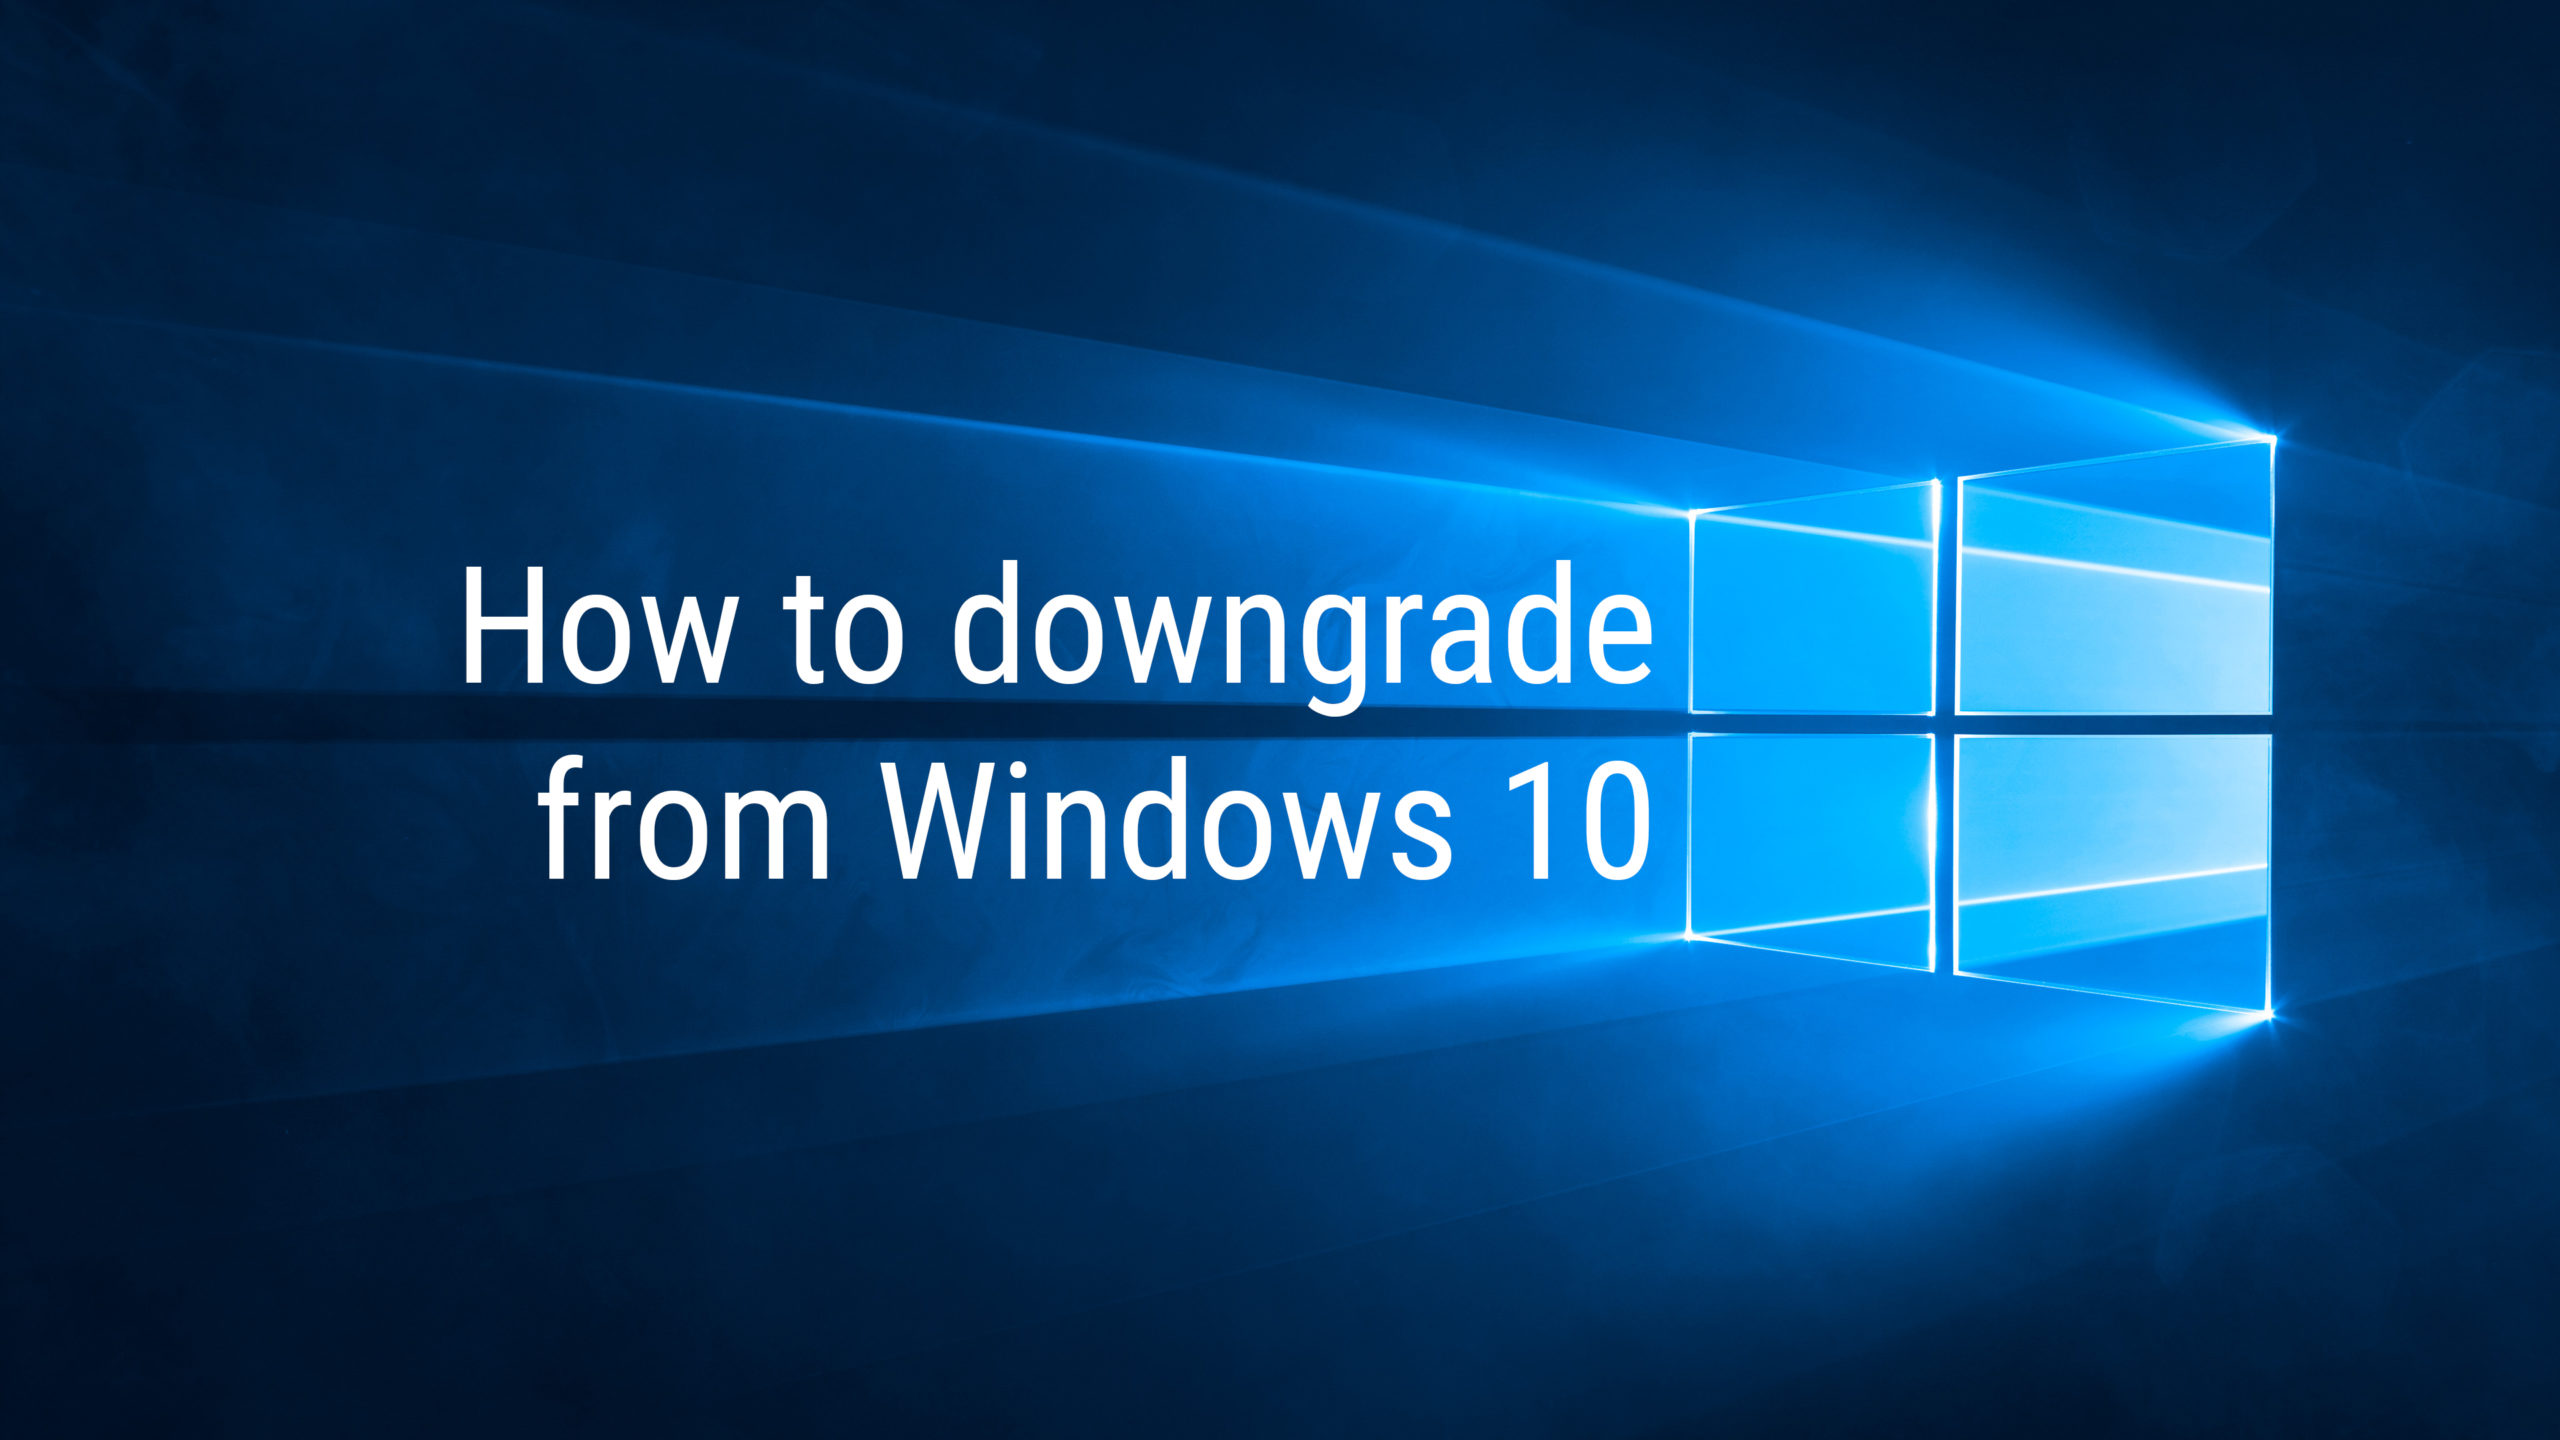 Cara menurunkan dari Windows 10 ke Windows 8.1 atau Windows 7